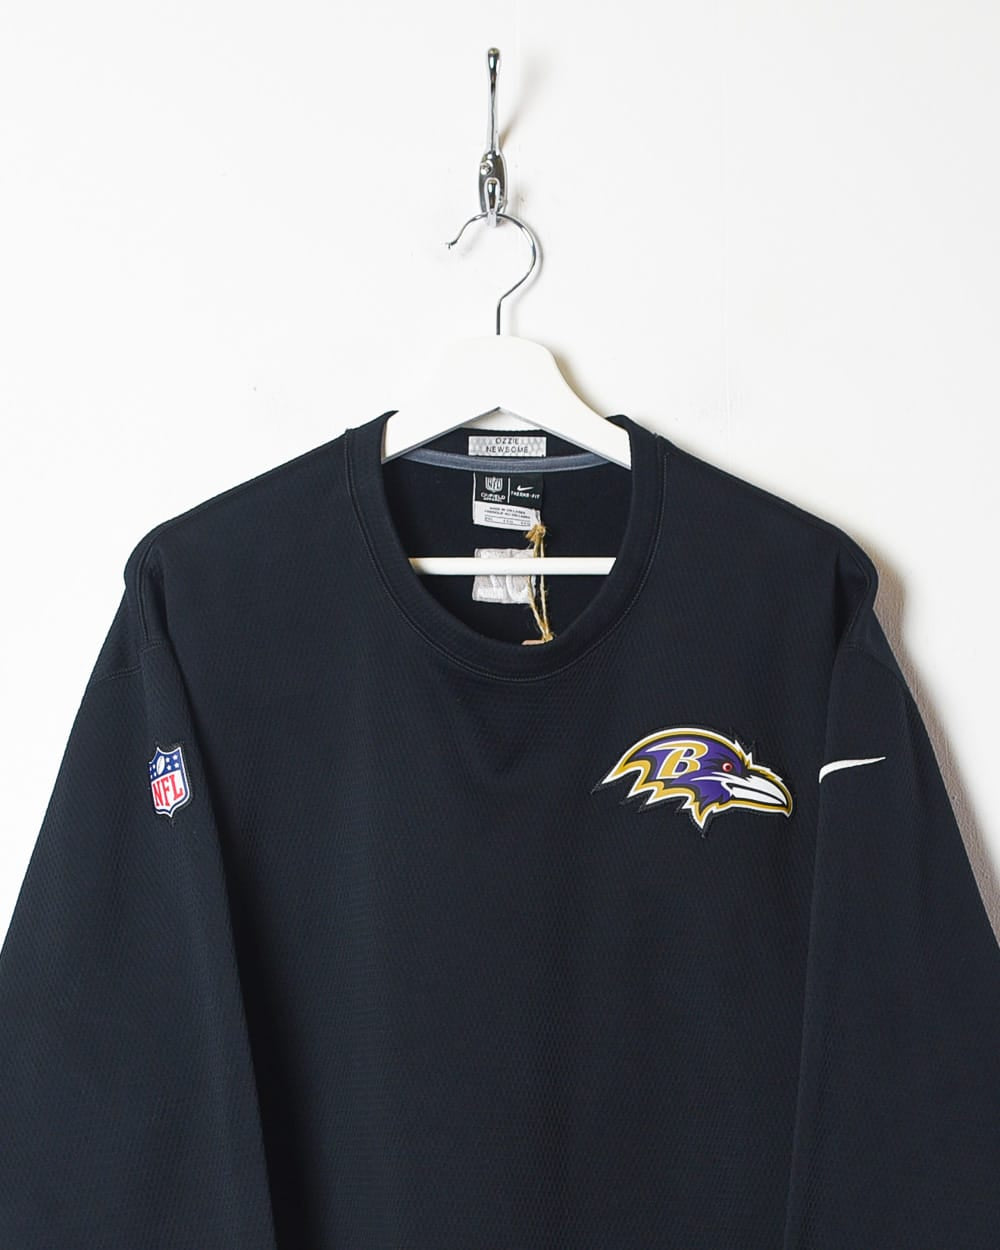 Black Nike X NFL Therma-Fit Baltimore Ravens Sweatshirt - XX-Large